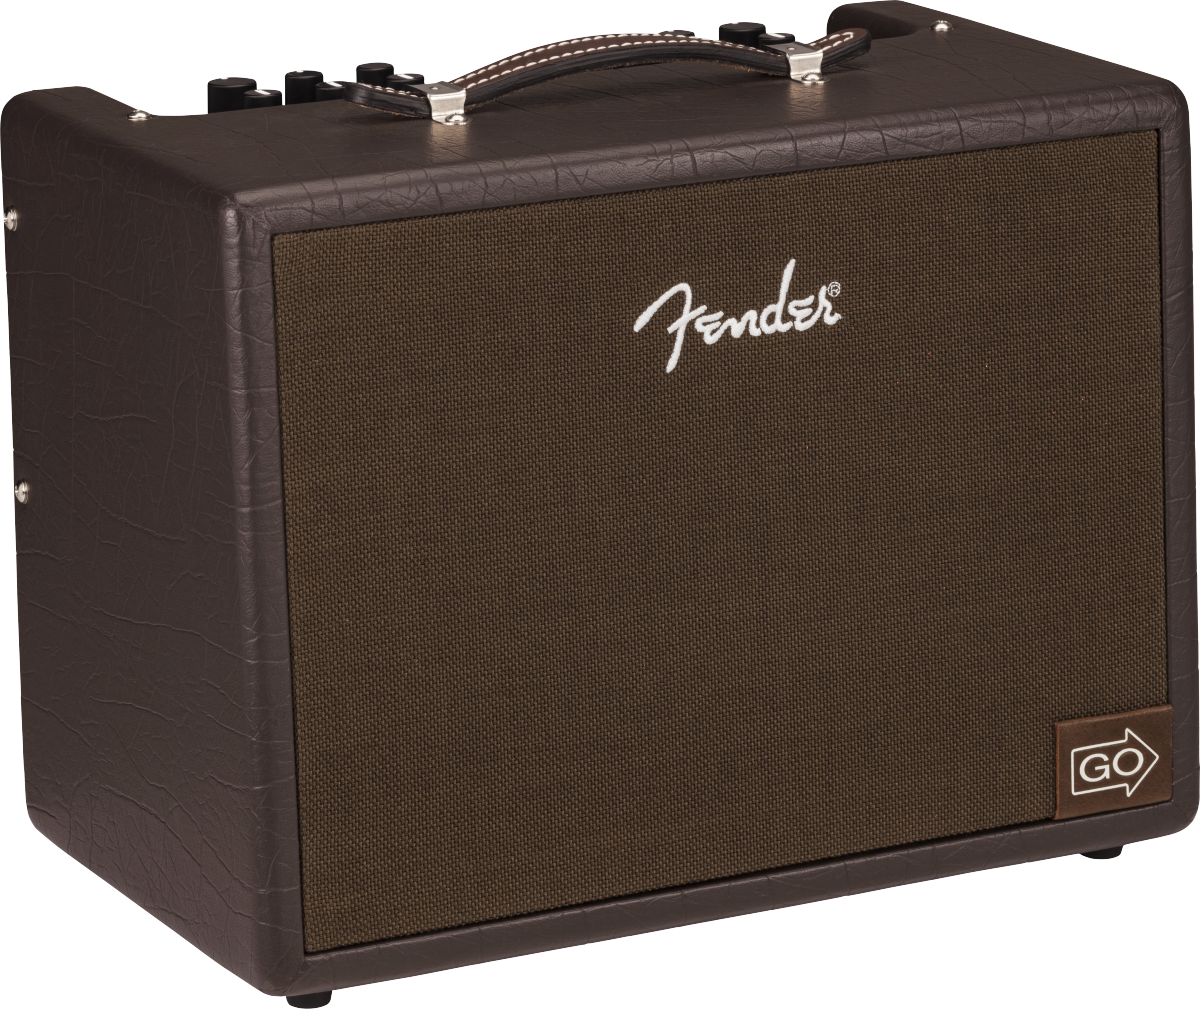 Fender Acoustic Junior GO Amplifier 2314400000